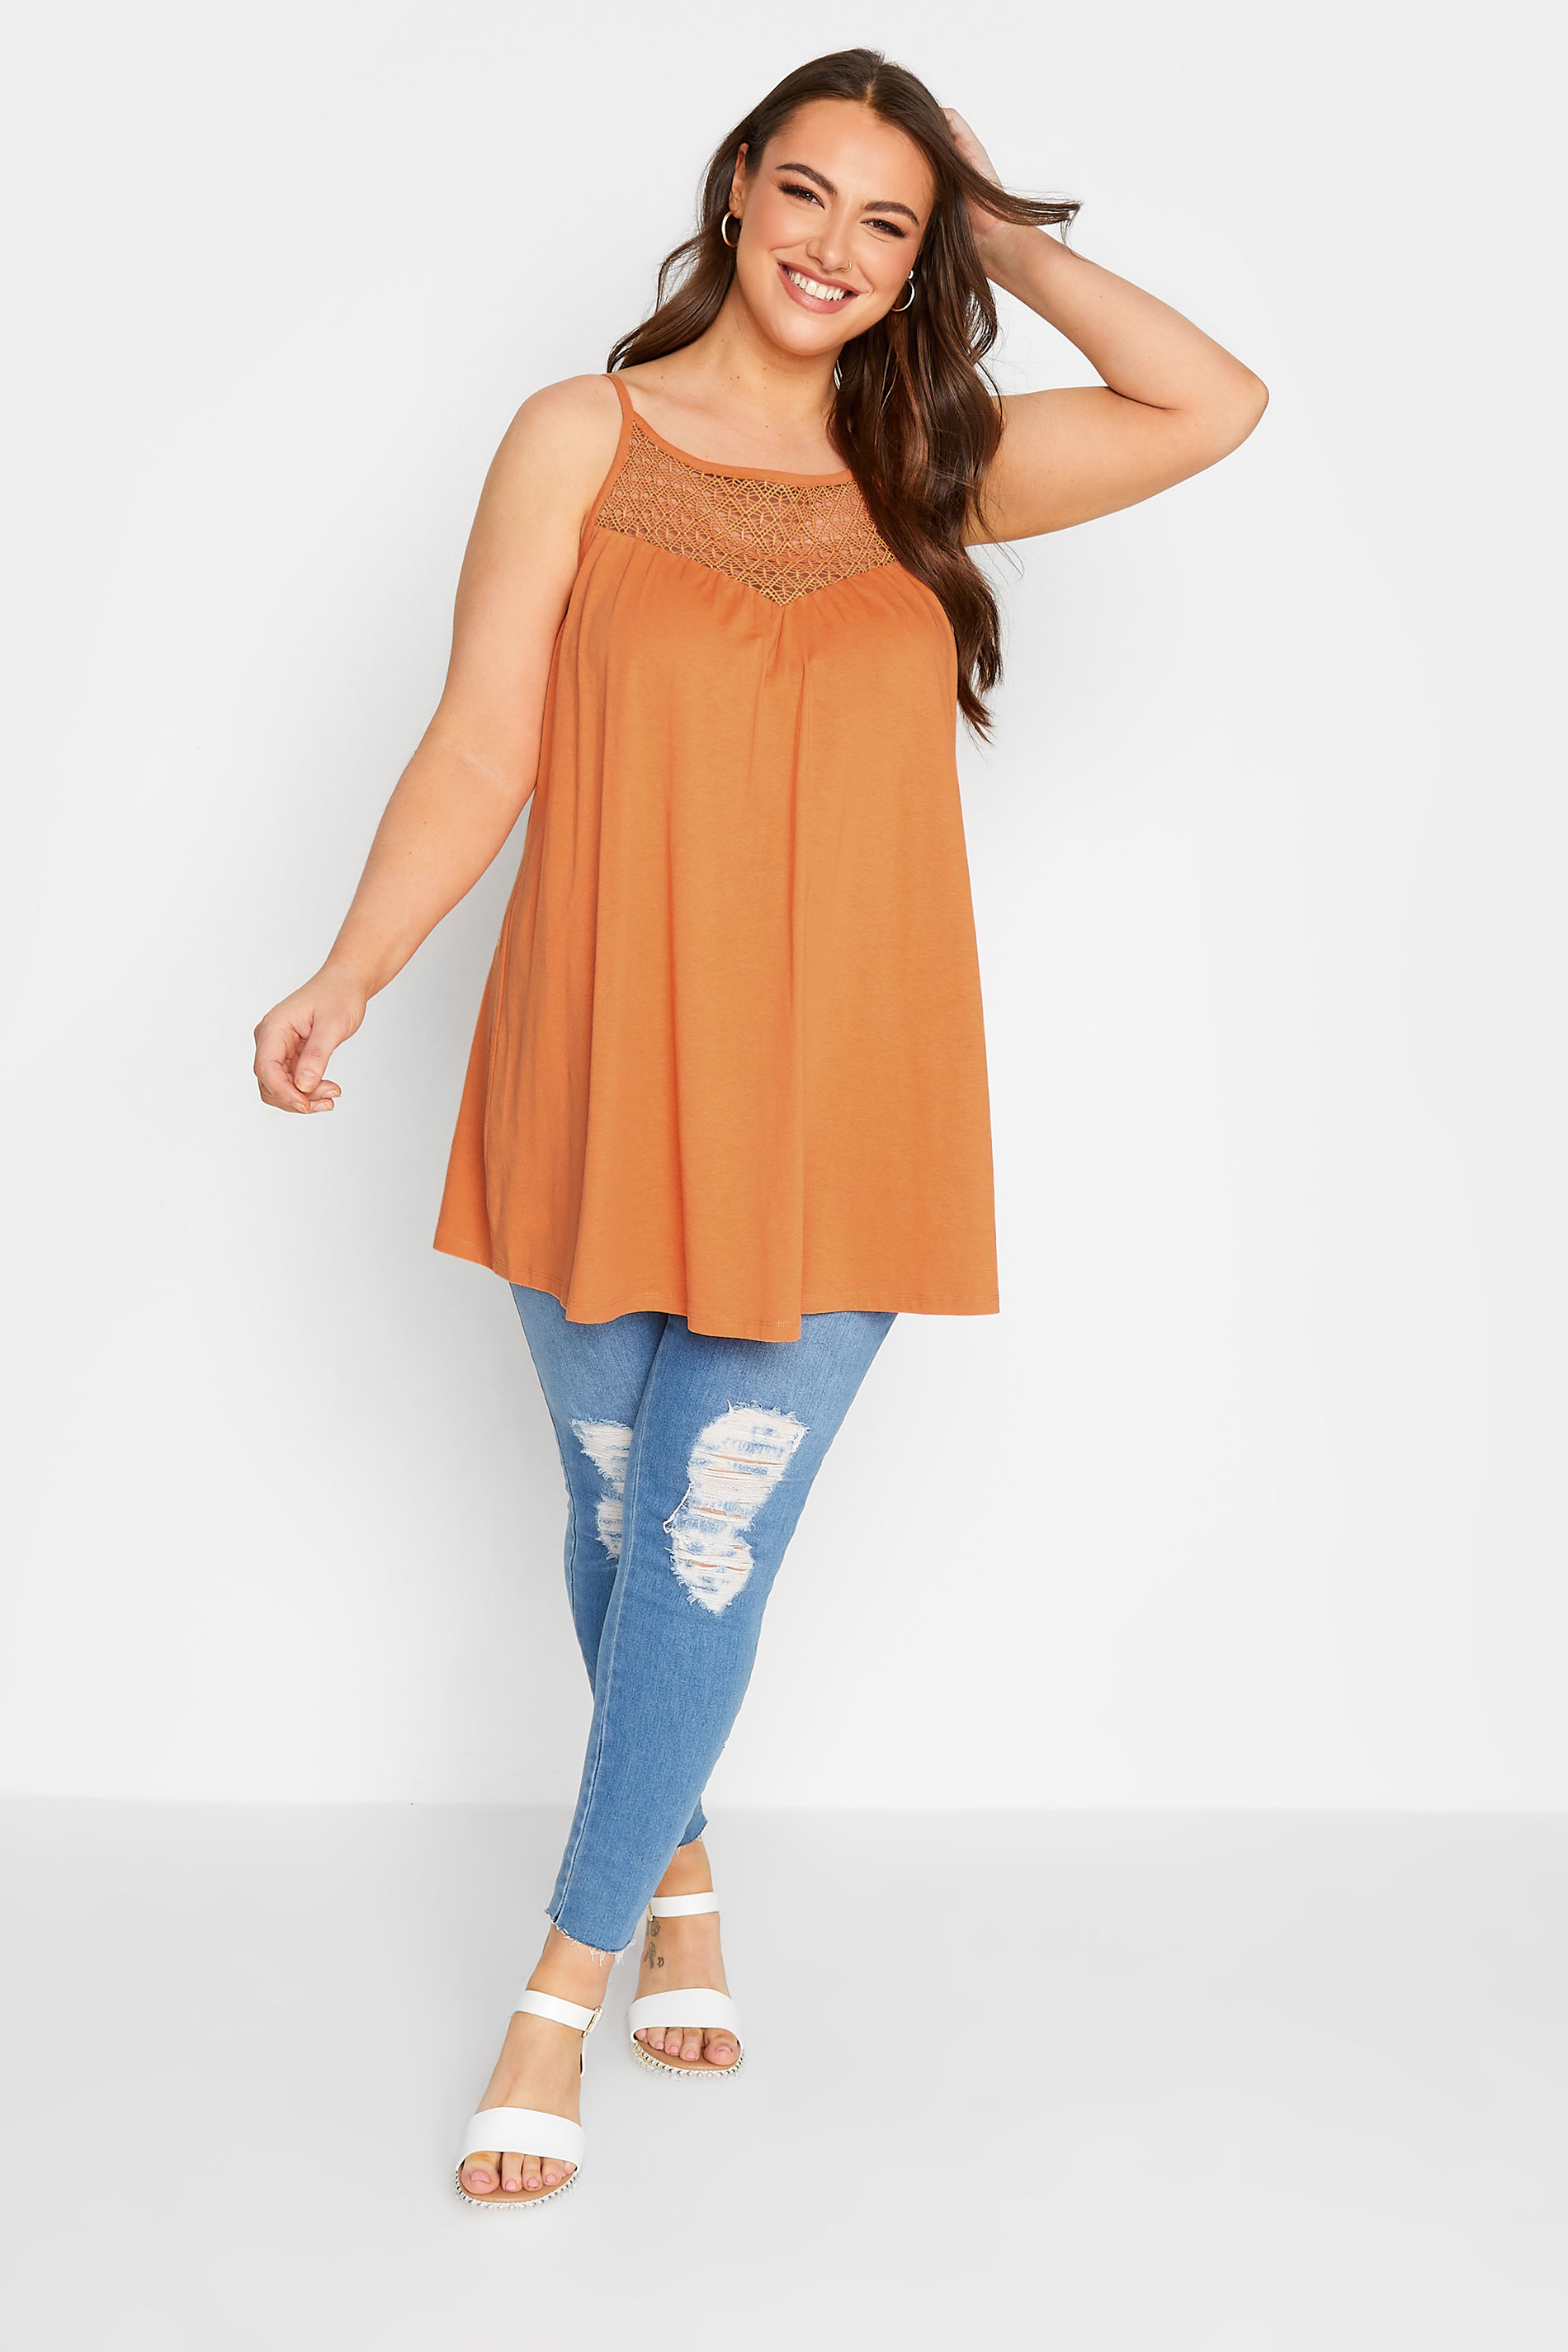 YOURS Plus Size Orange Crochet Vest Top | Yours Clothing  2